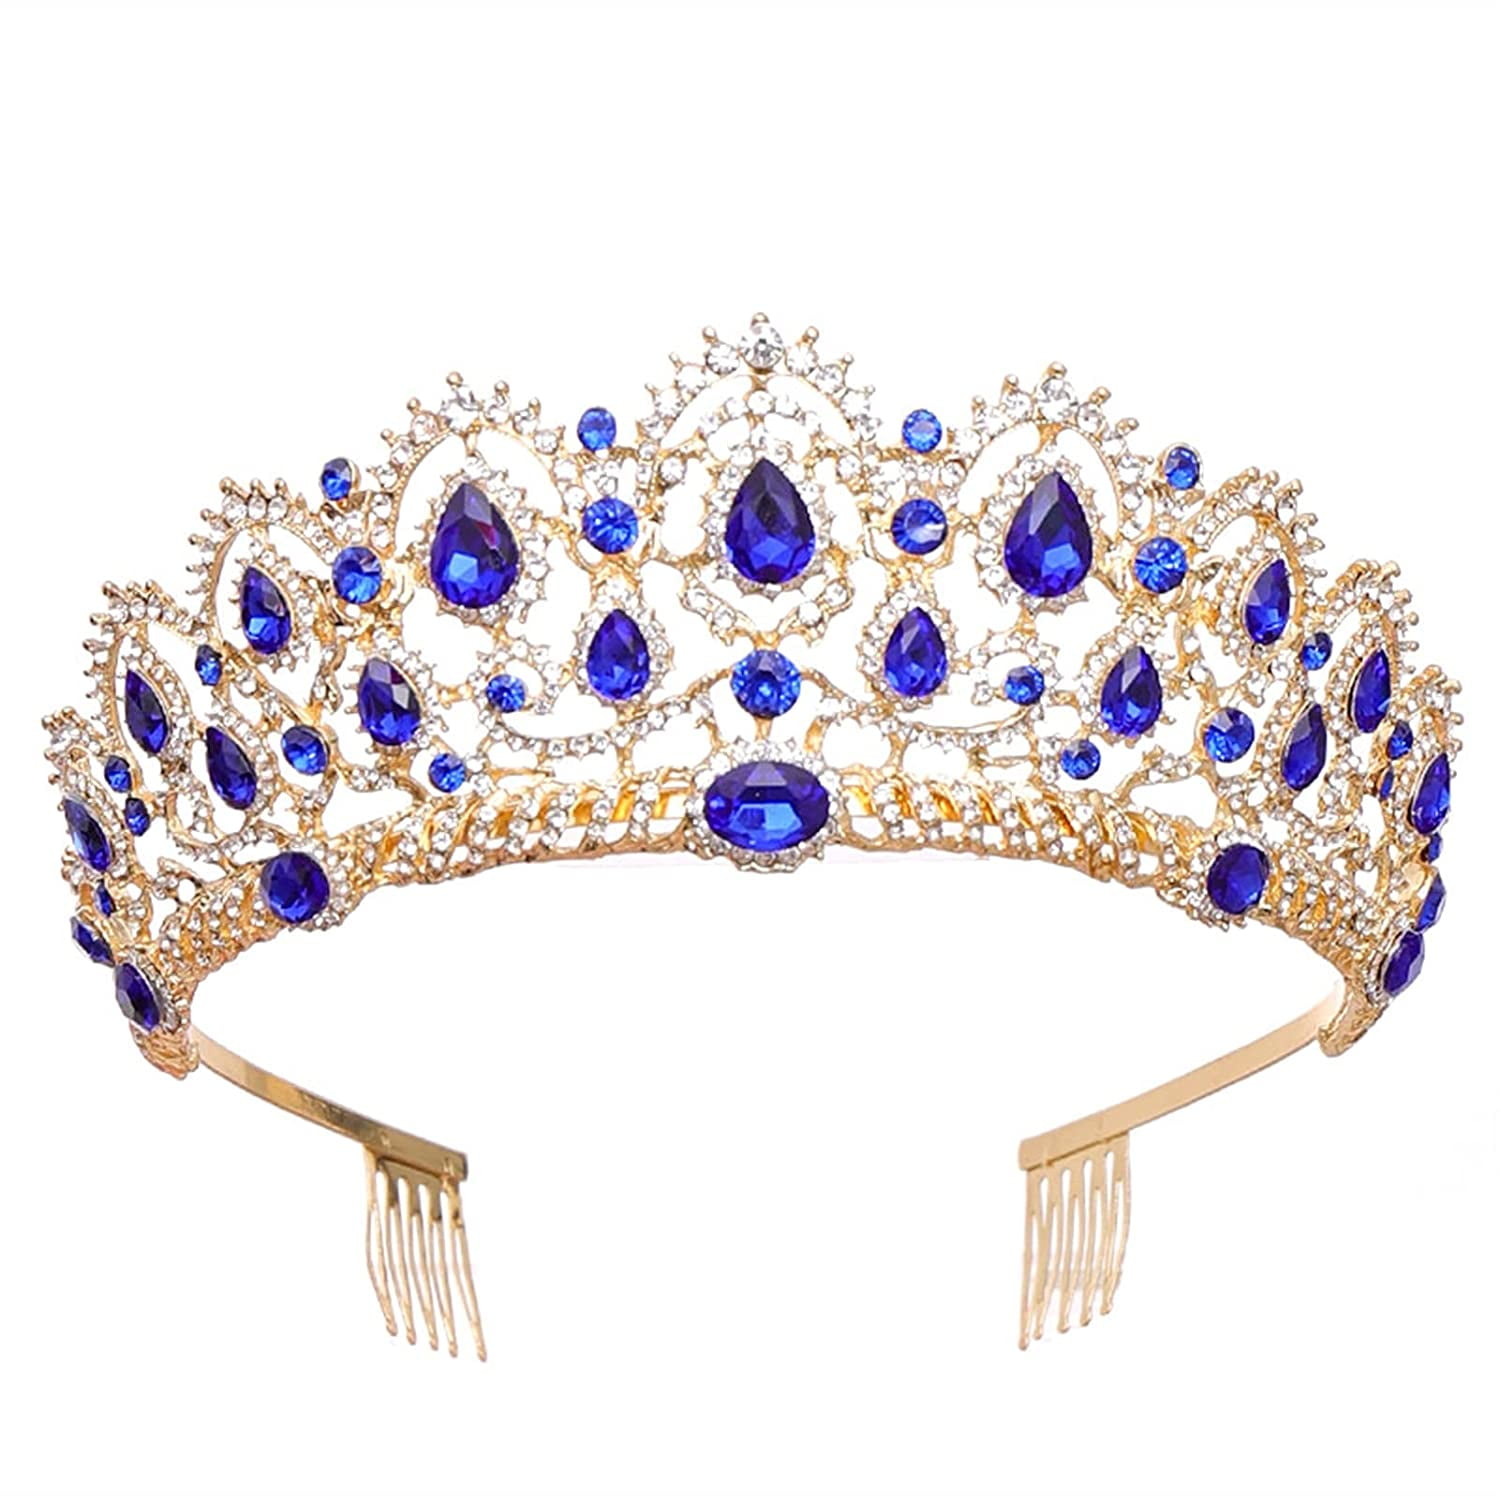 Accessories Hair Jewelry Crown Hair Comb Tiara Headpieces Crystal Rhinestone 